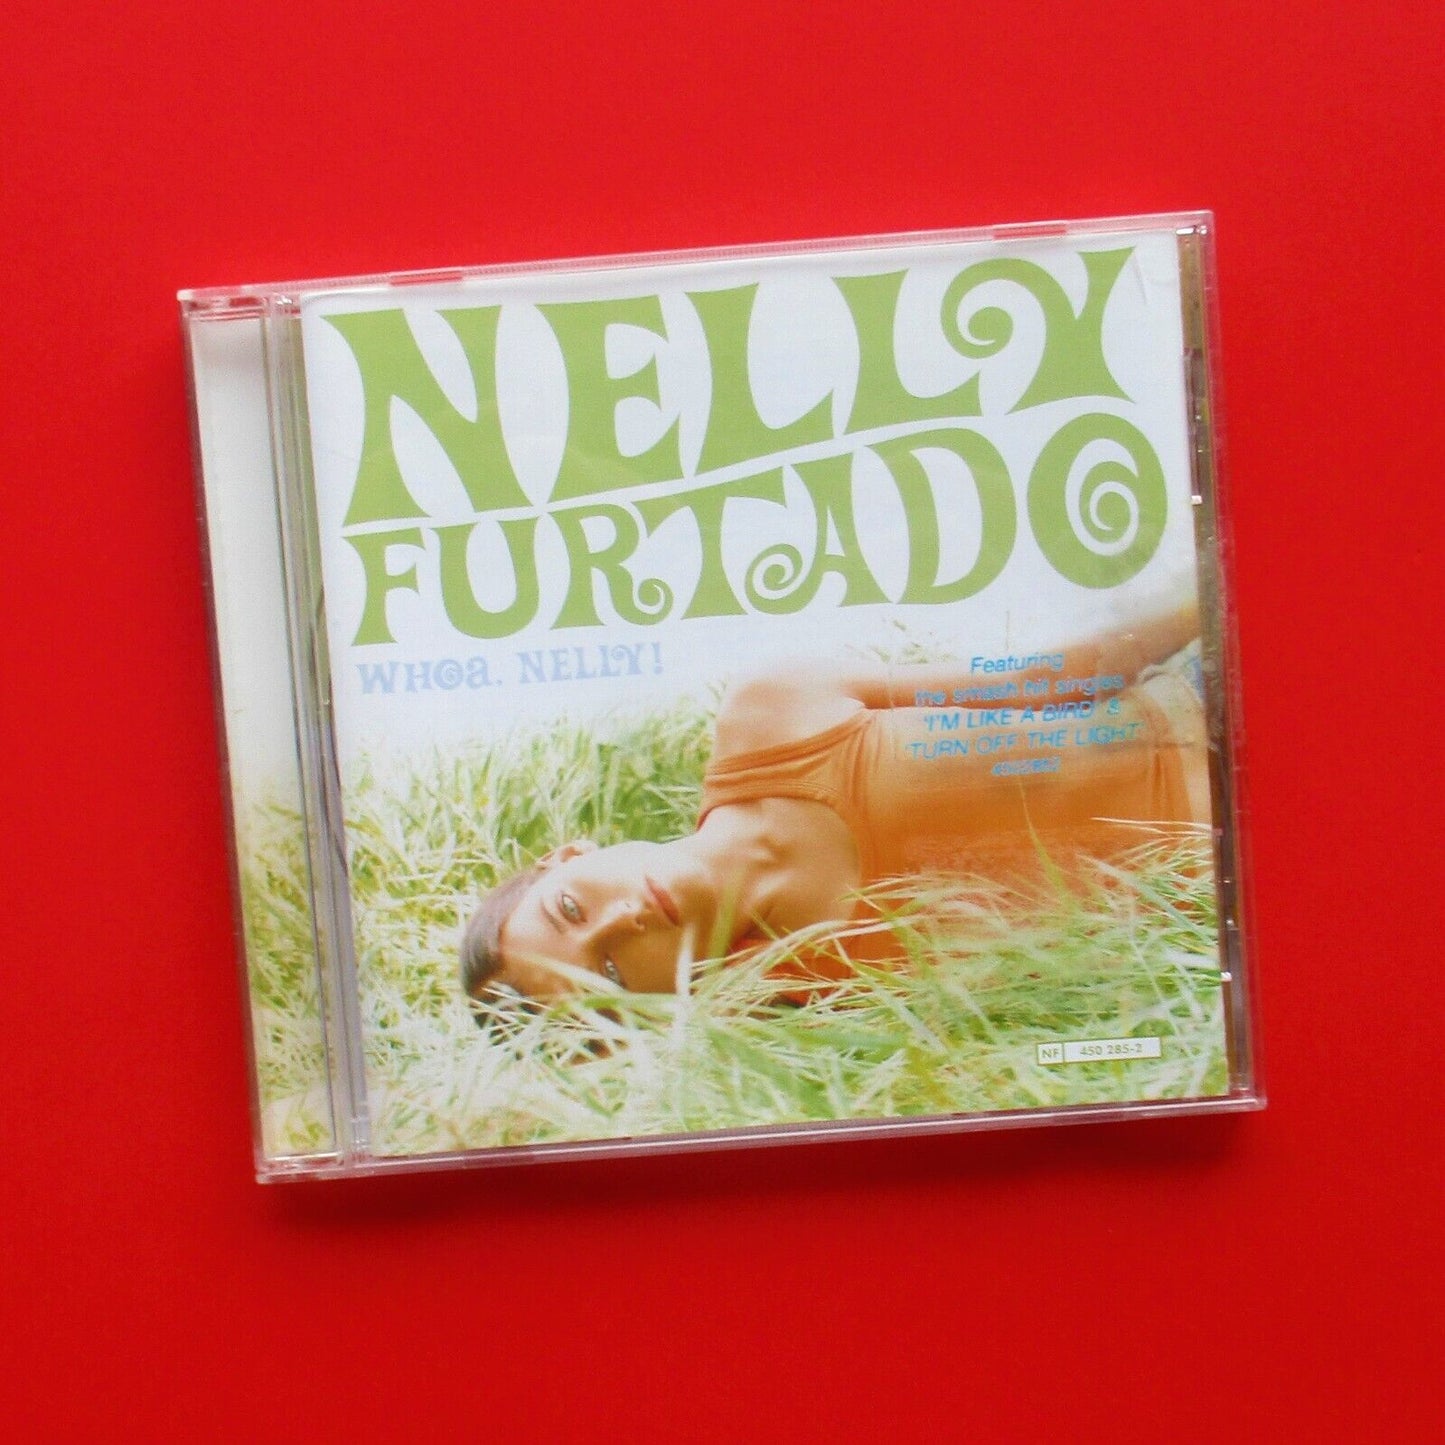 Nelly Furtado ‎Whoa, Nelly! 2001 CD Album